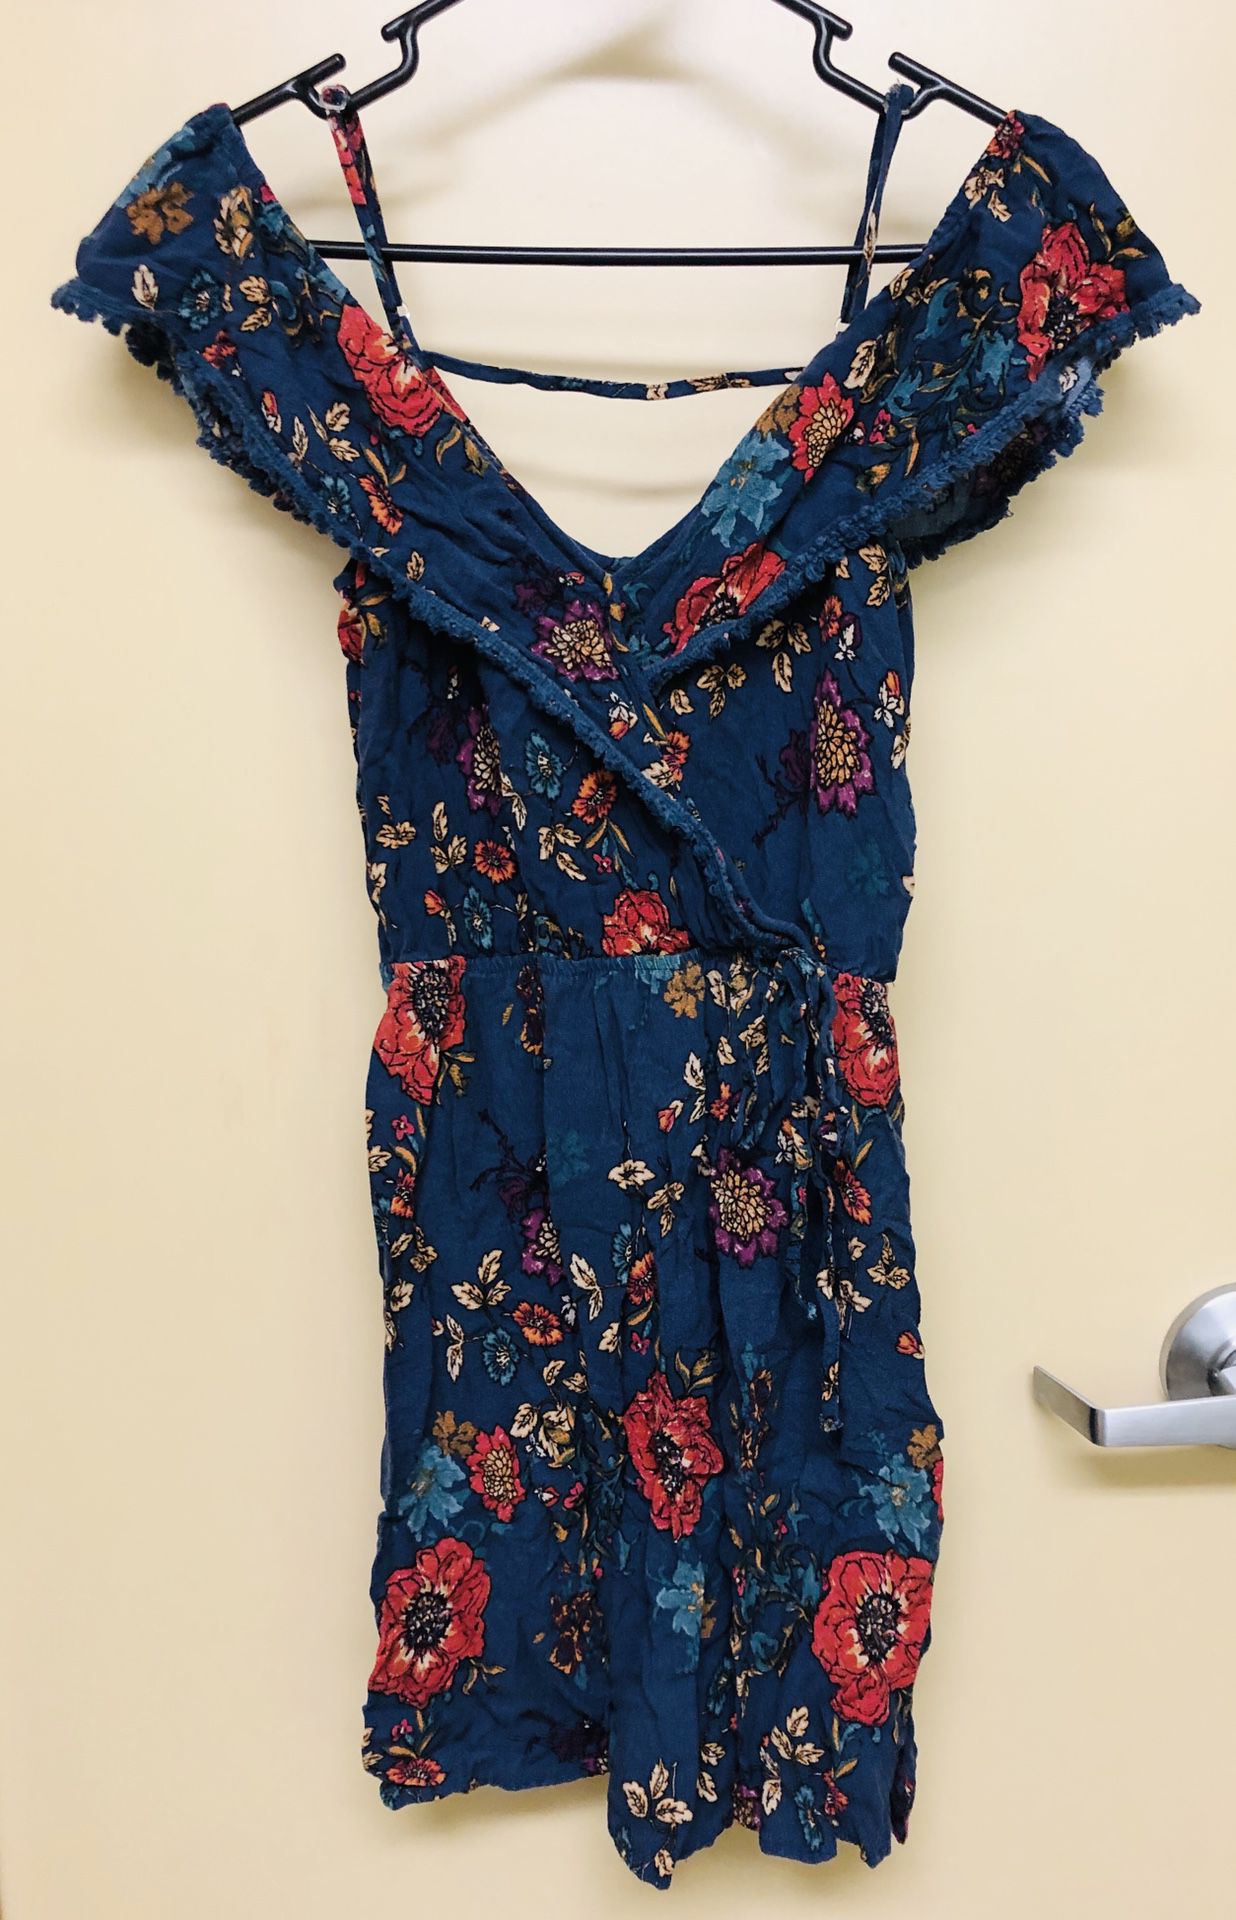 Blue flower print ‘Xhilarition’ Dress (size medium)